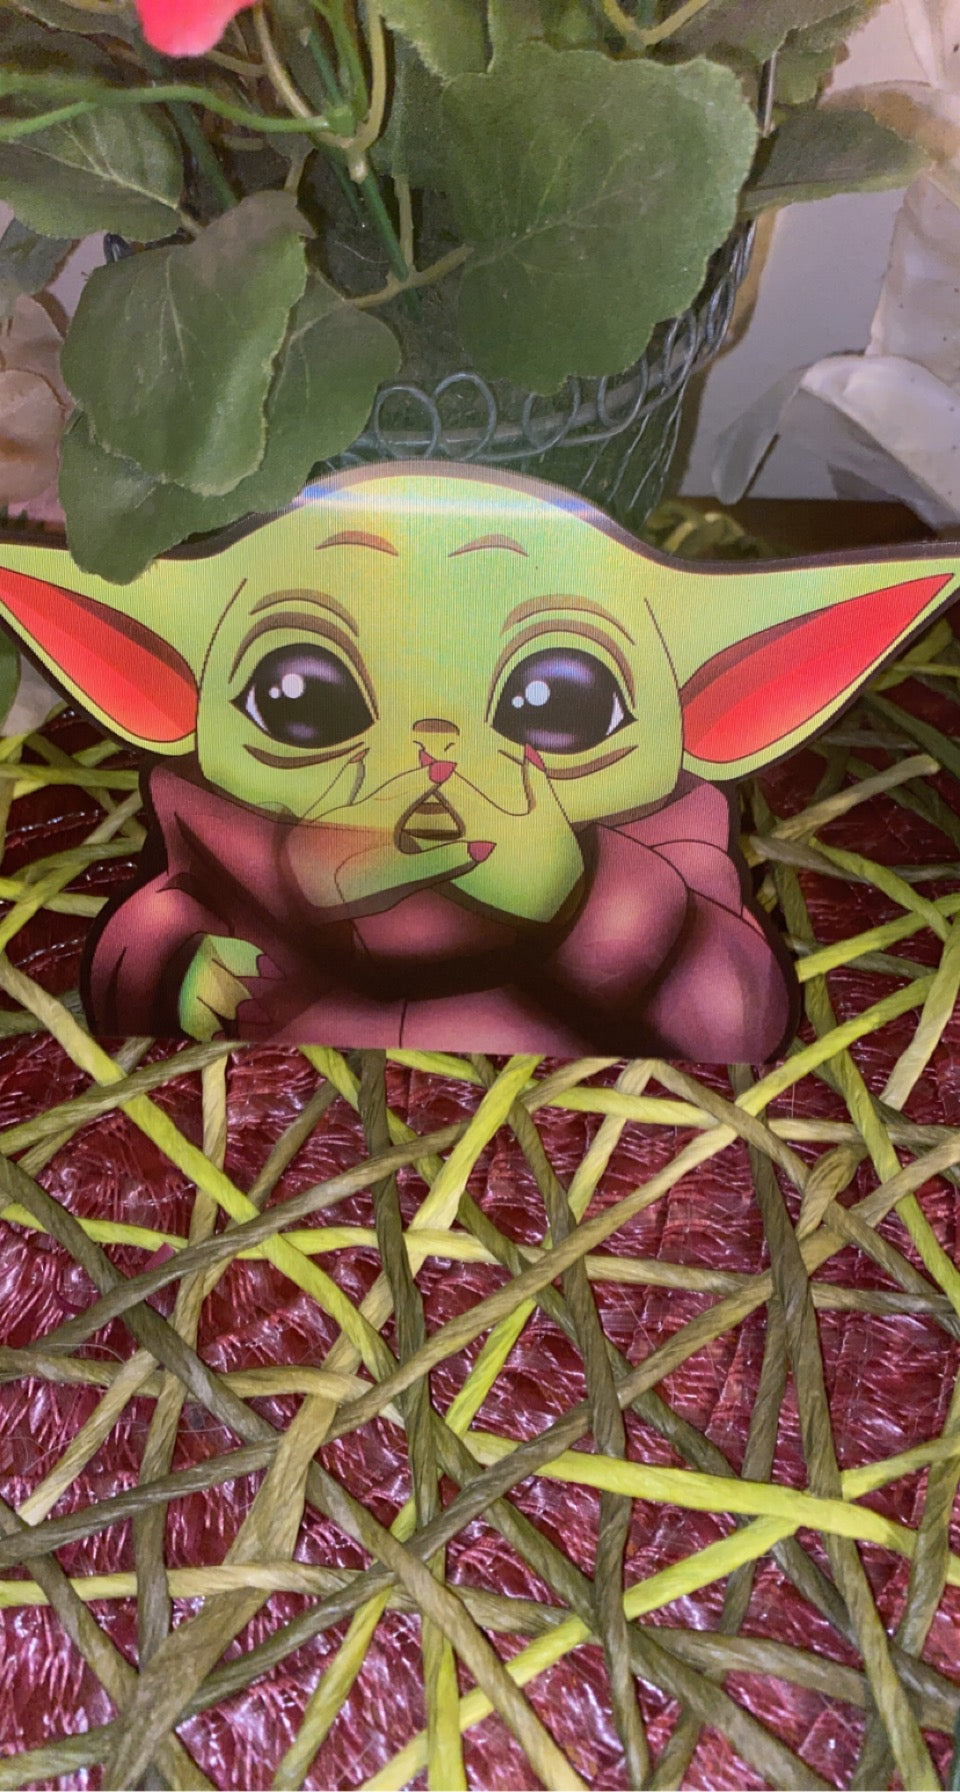 **Pre Order** “Baby Yoda” - Car decal